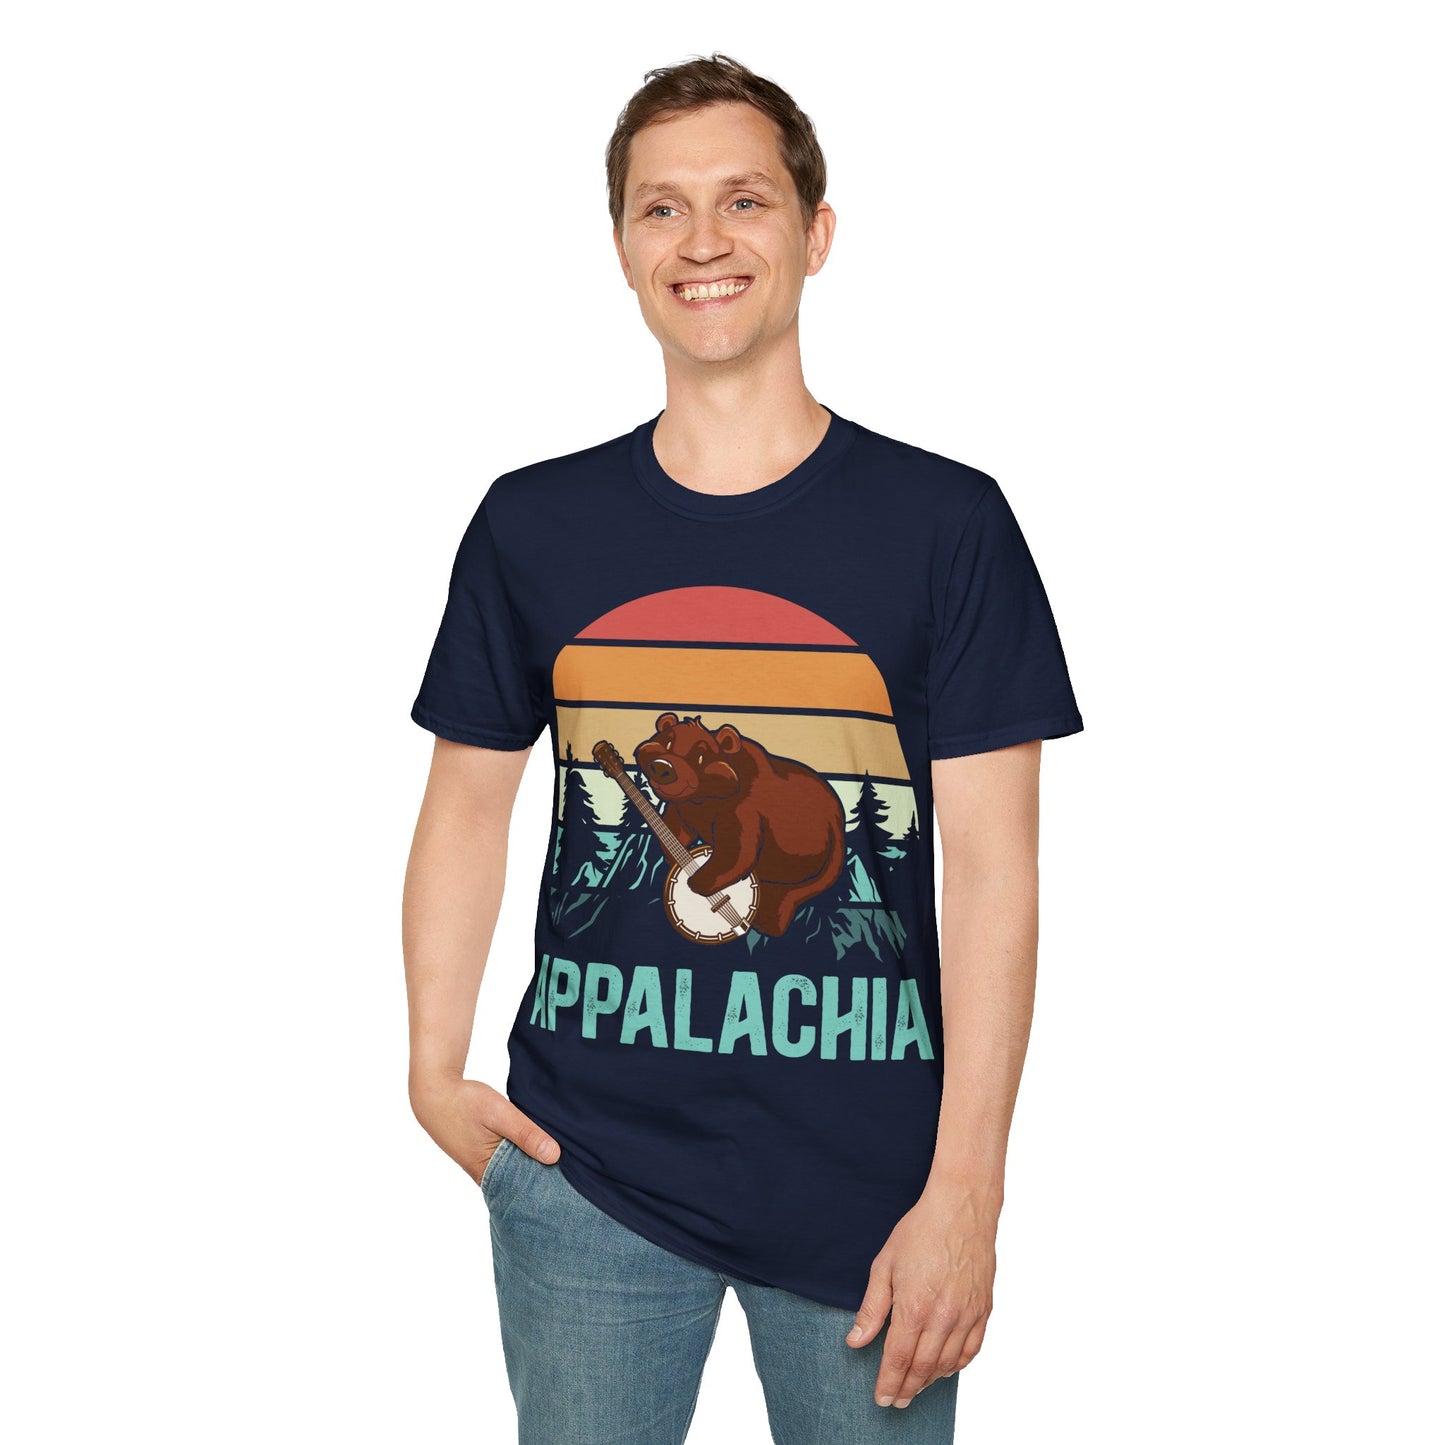 Appalachia T-Shirt